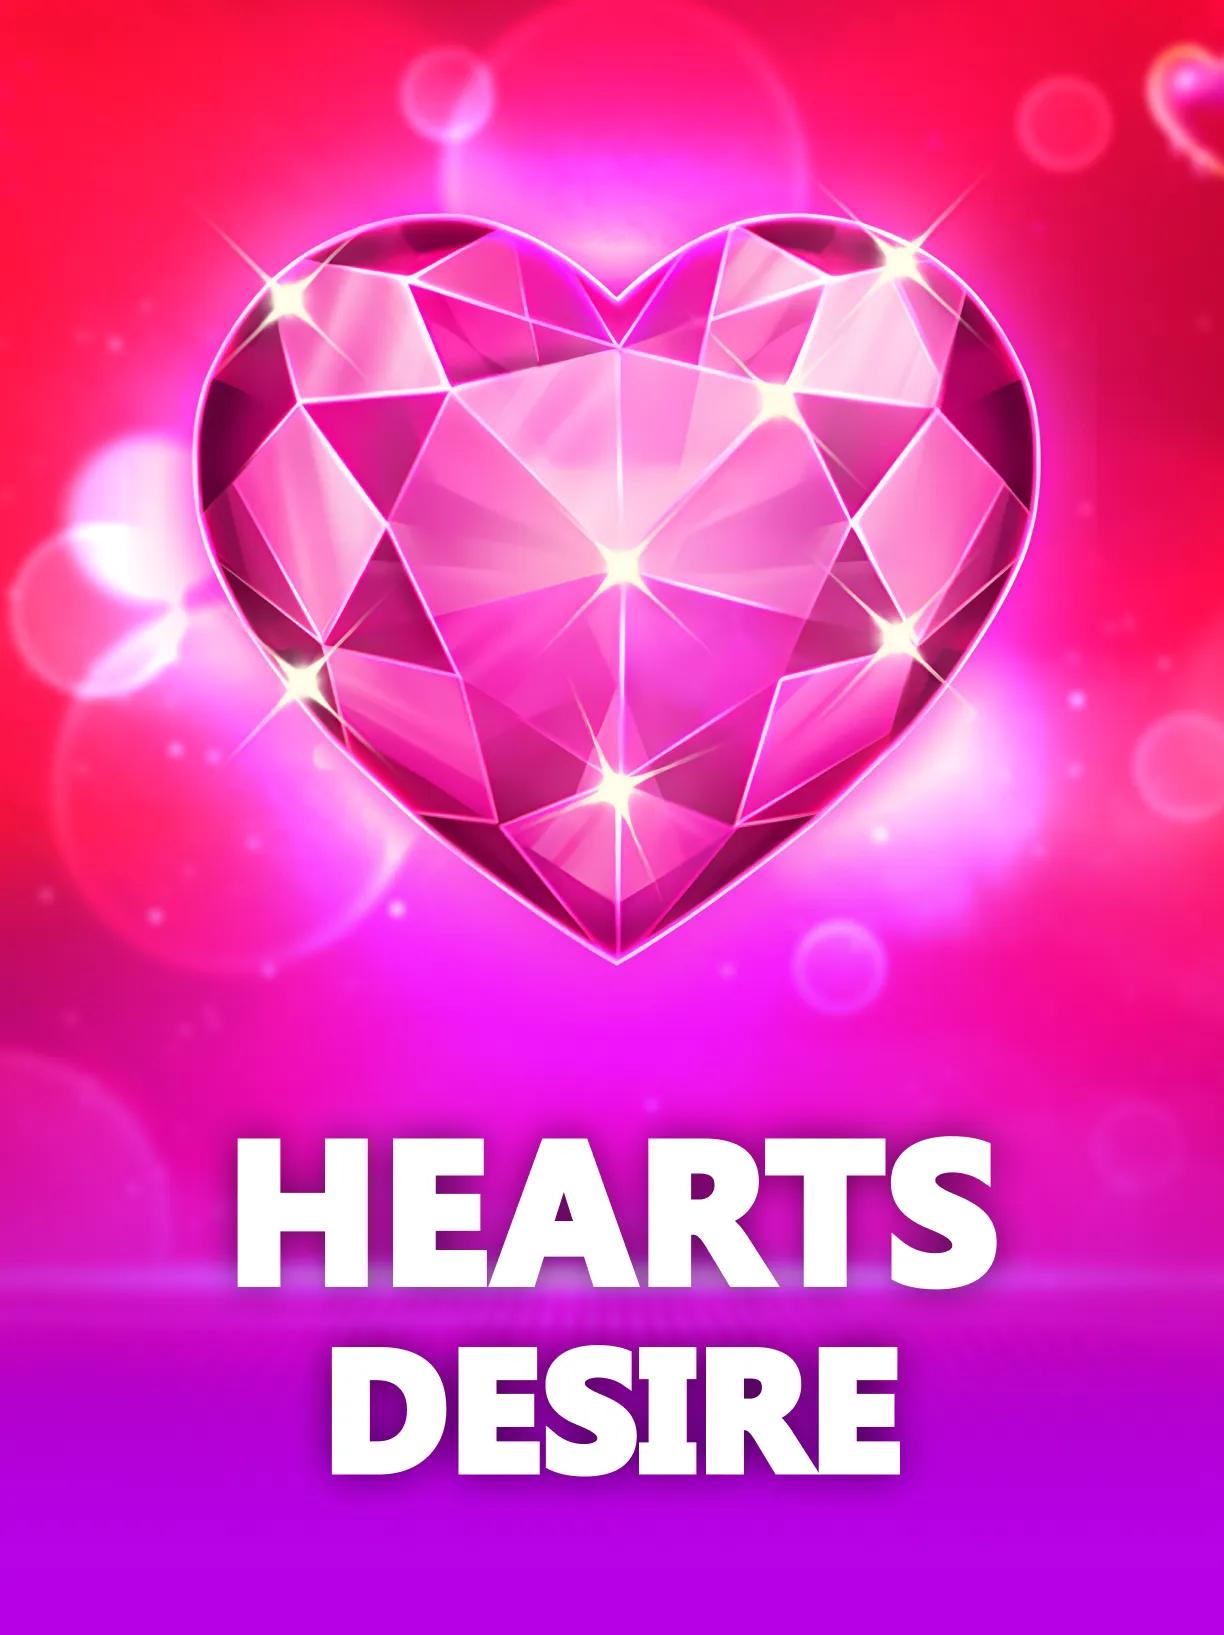 Hearts Desire NJP